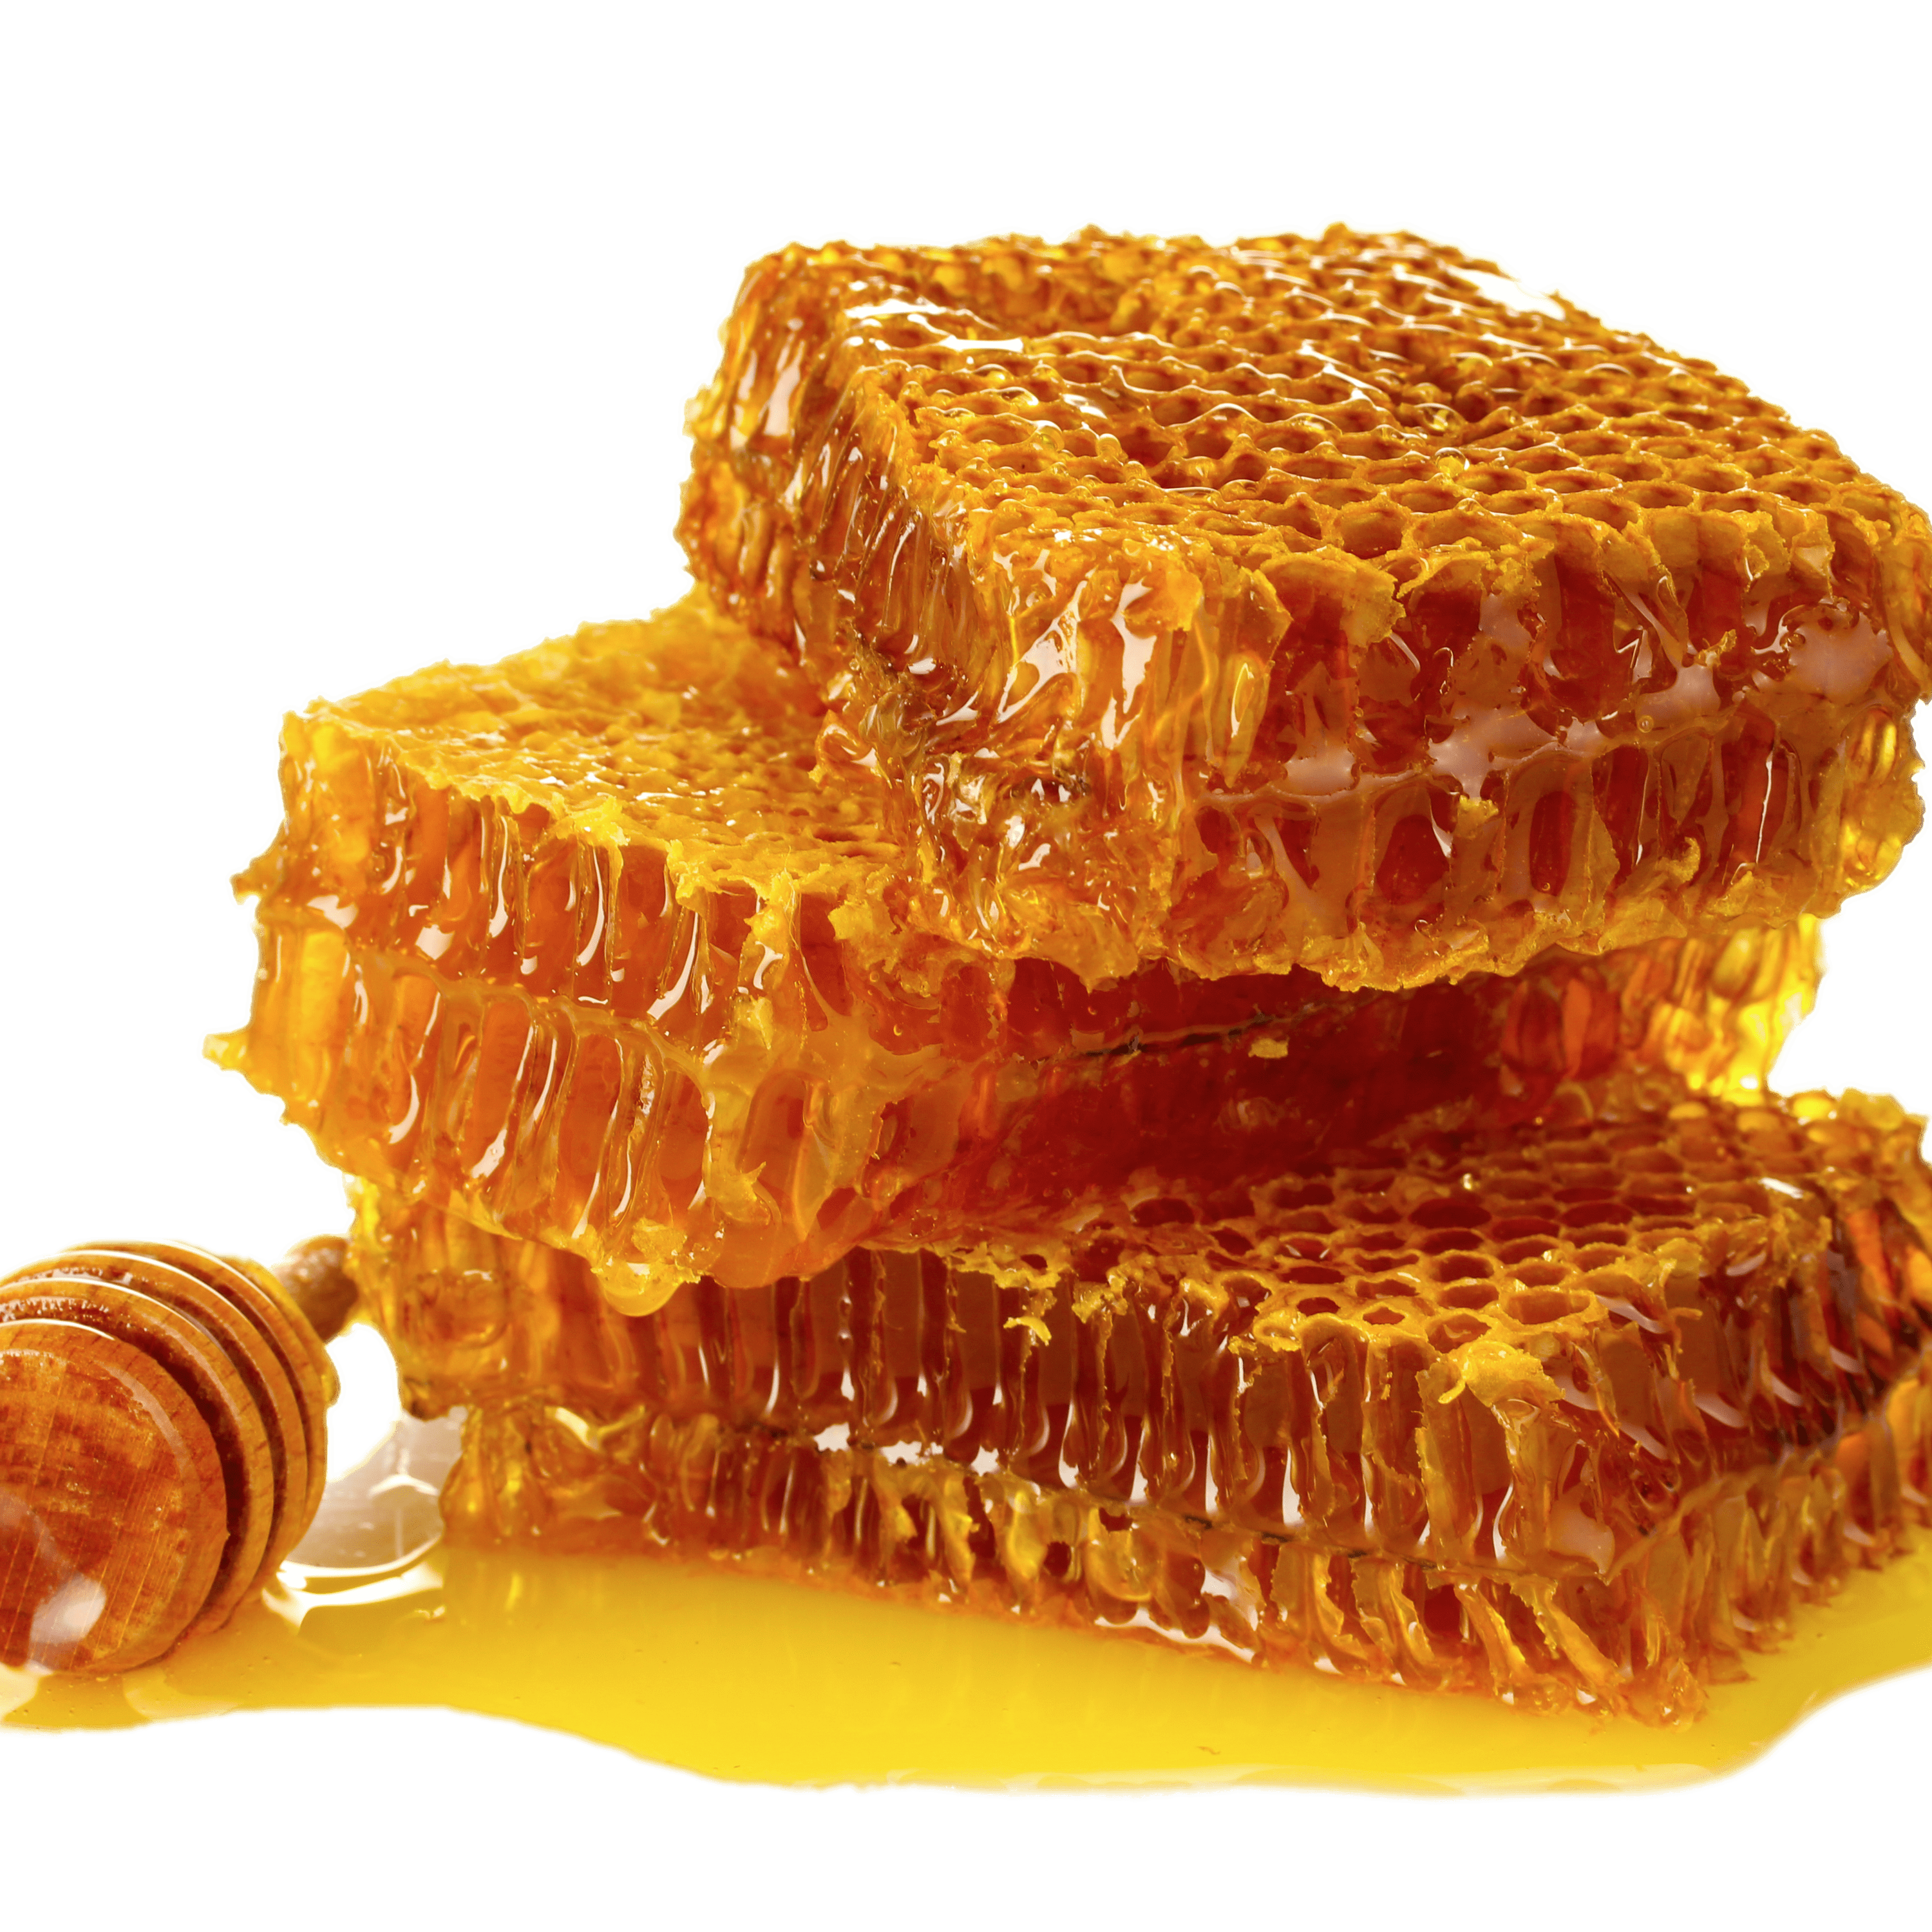 Organic Honeycomb Free Download PNG HD PNG Image